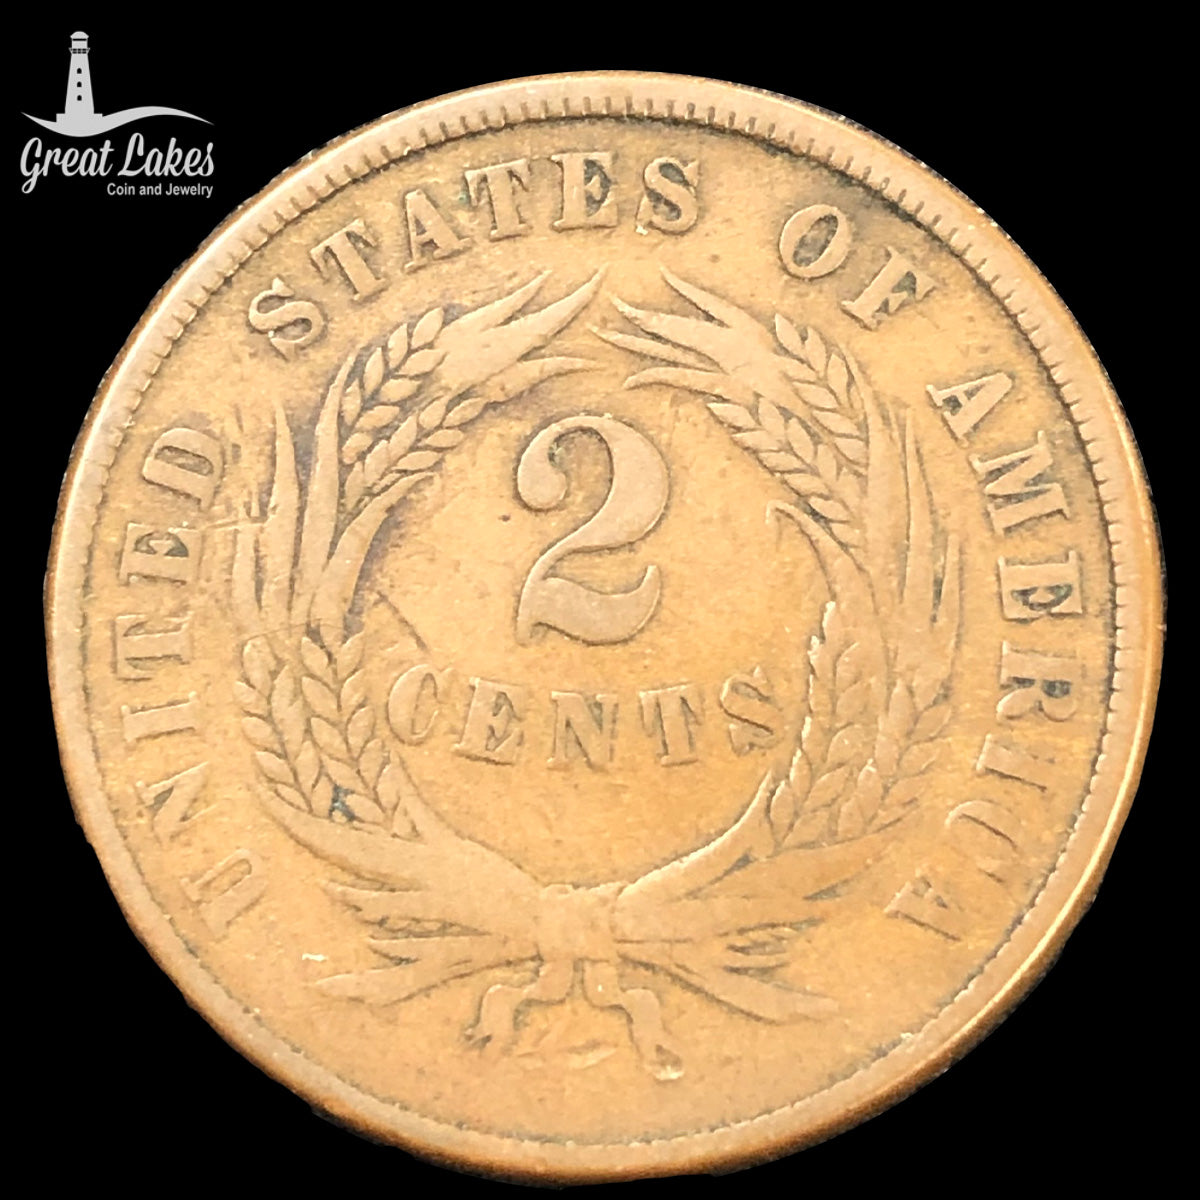 1866 2 Cent Piece (F)